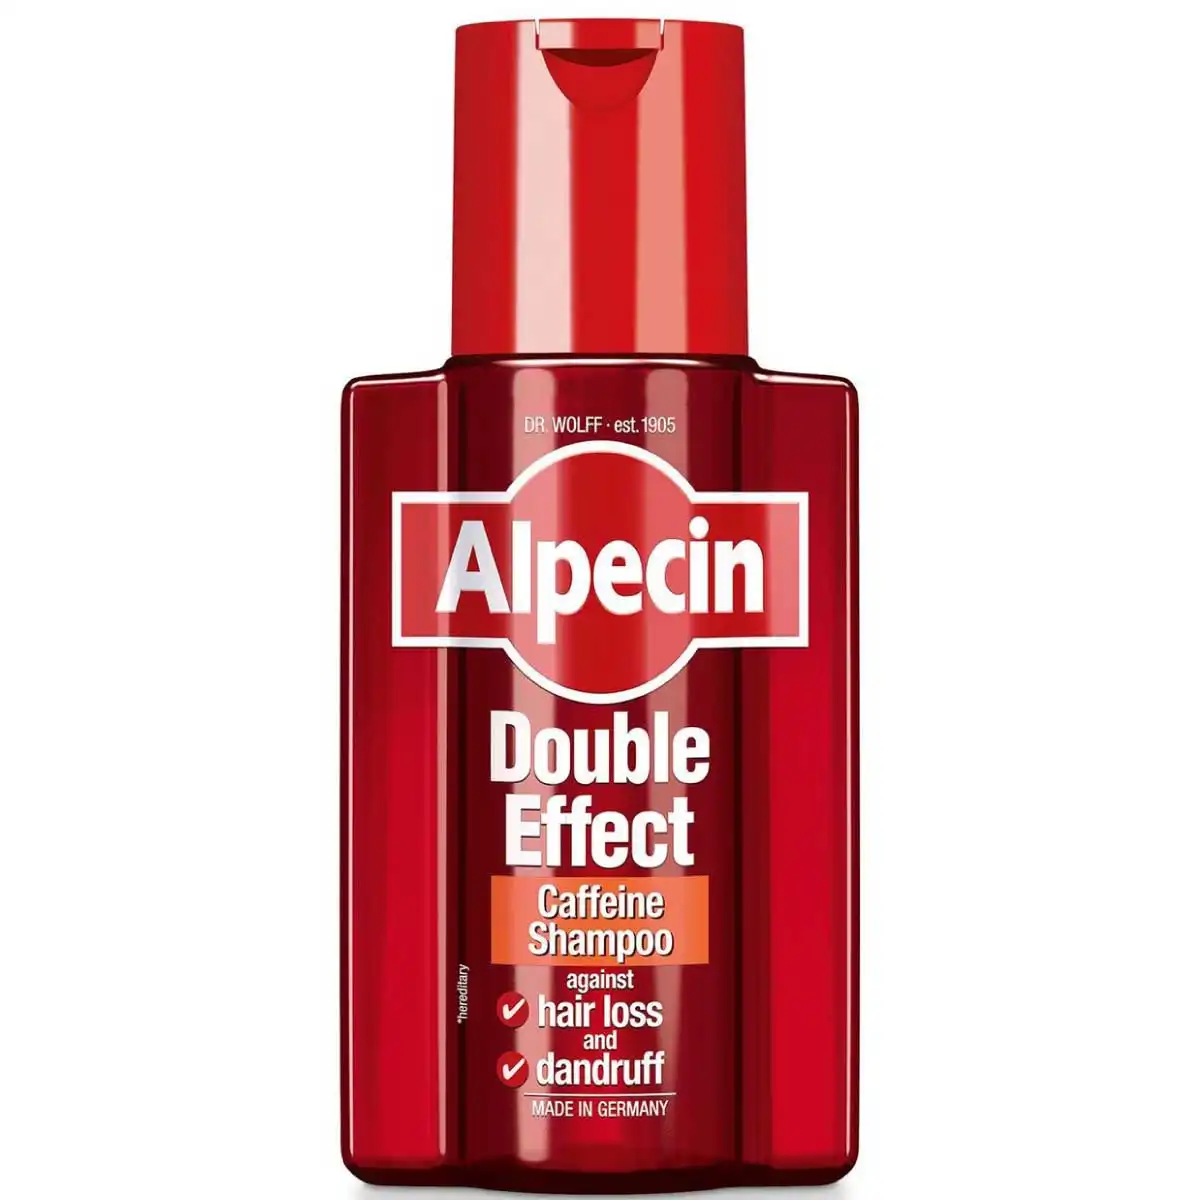 dökülme karşıtı şampuan Alpecin Doubleeffect Caffeine Shampoo